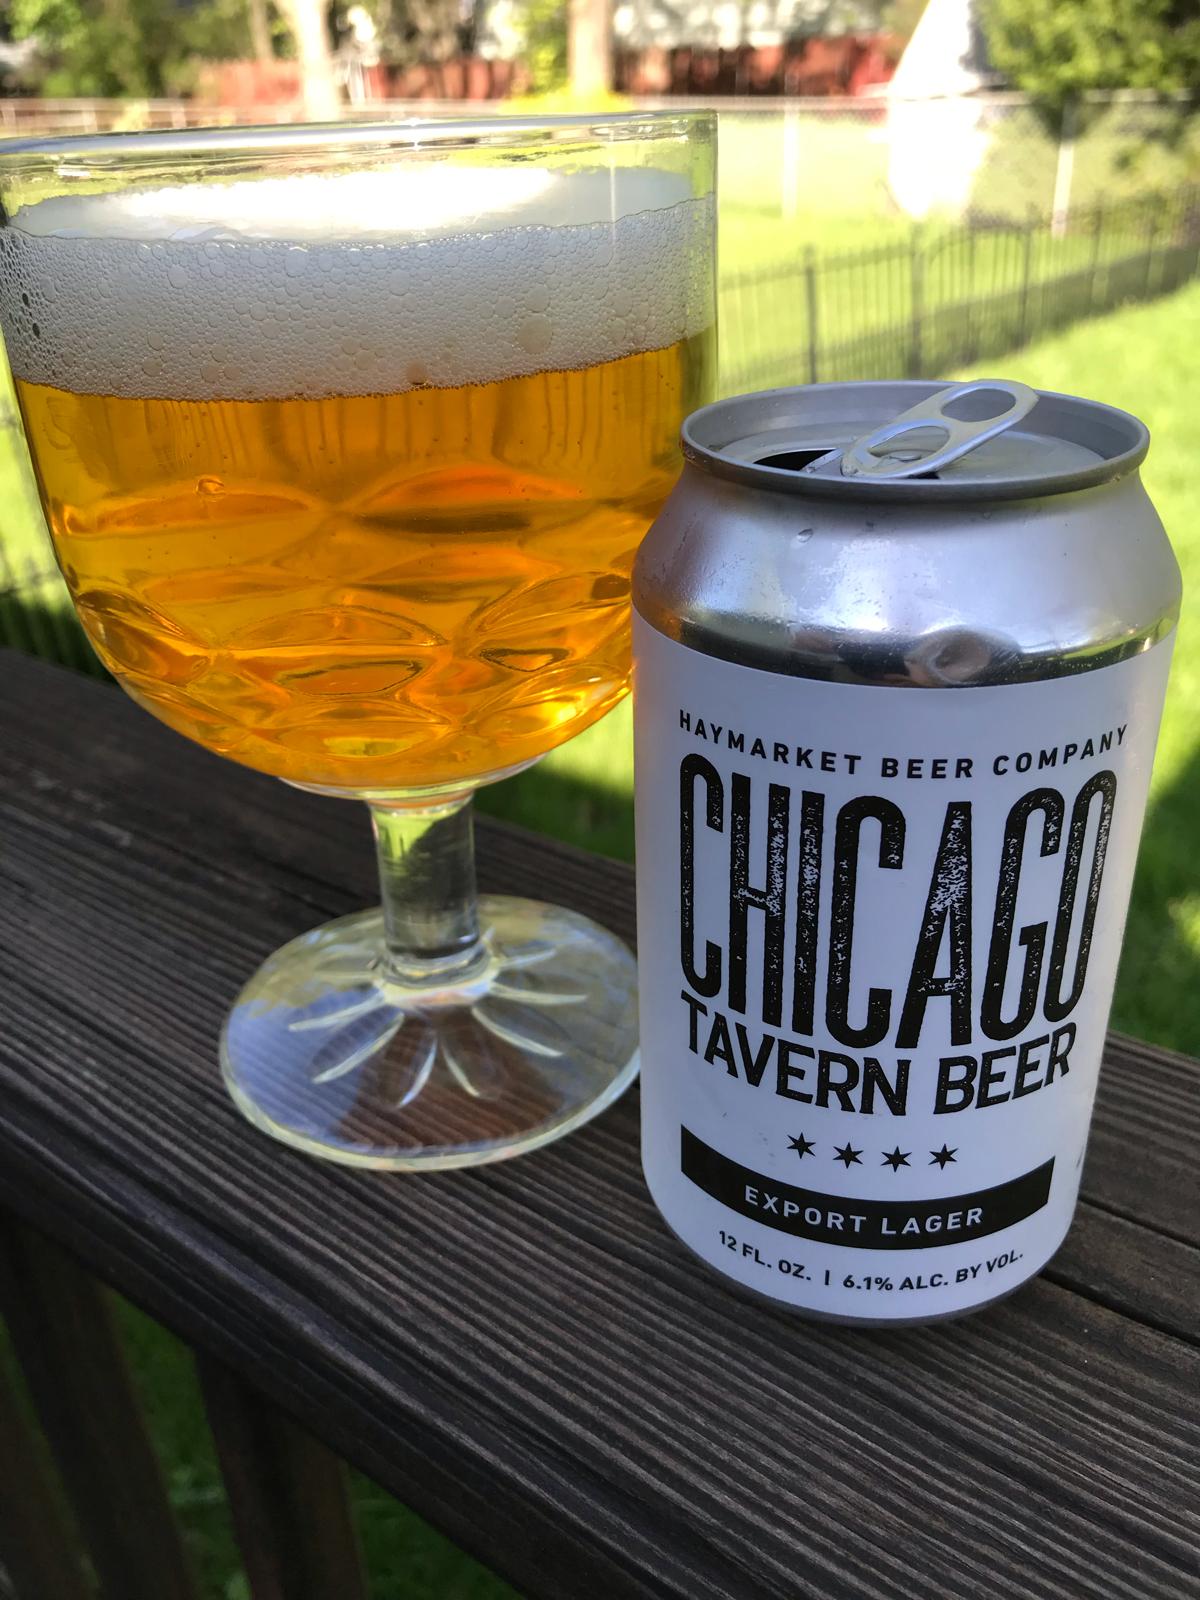 Chicago Tavern Beer